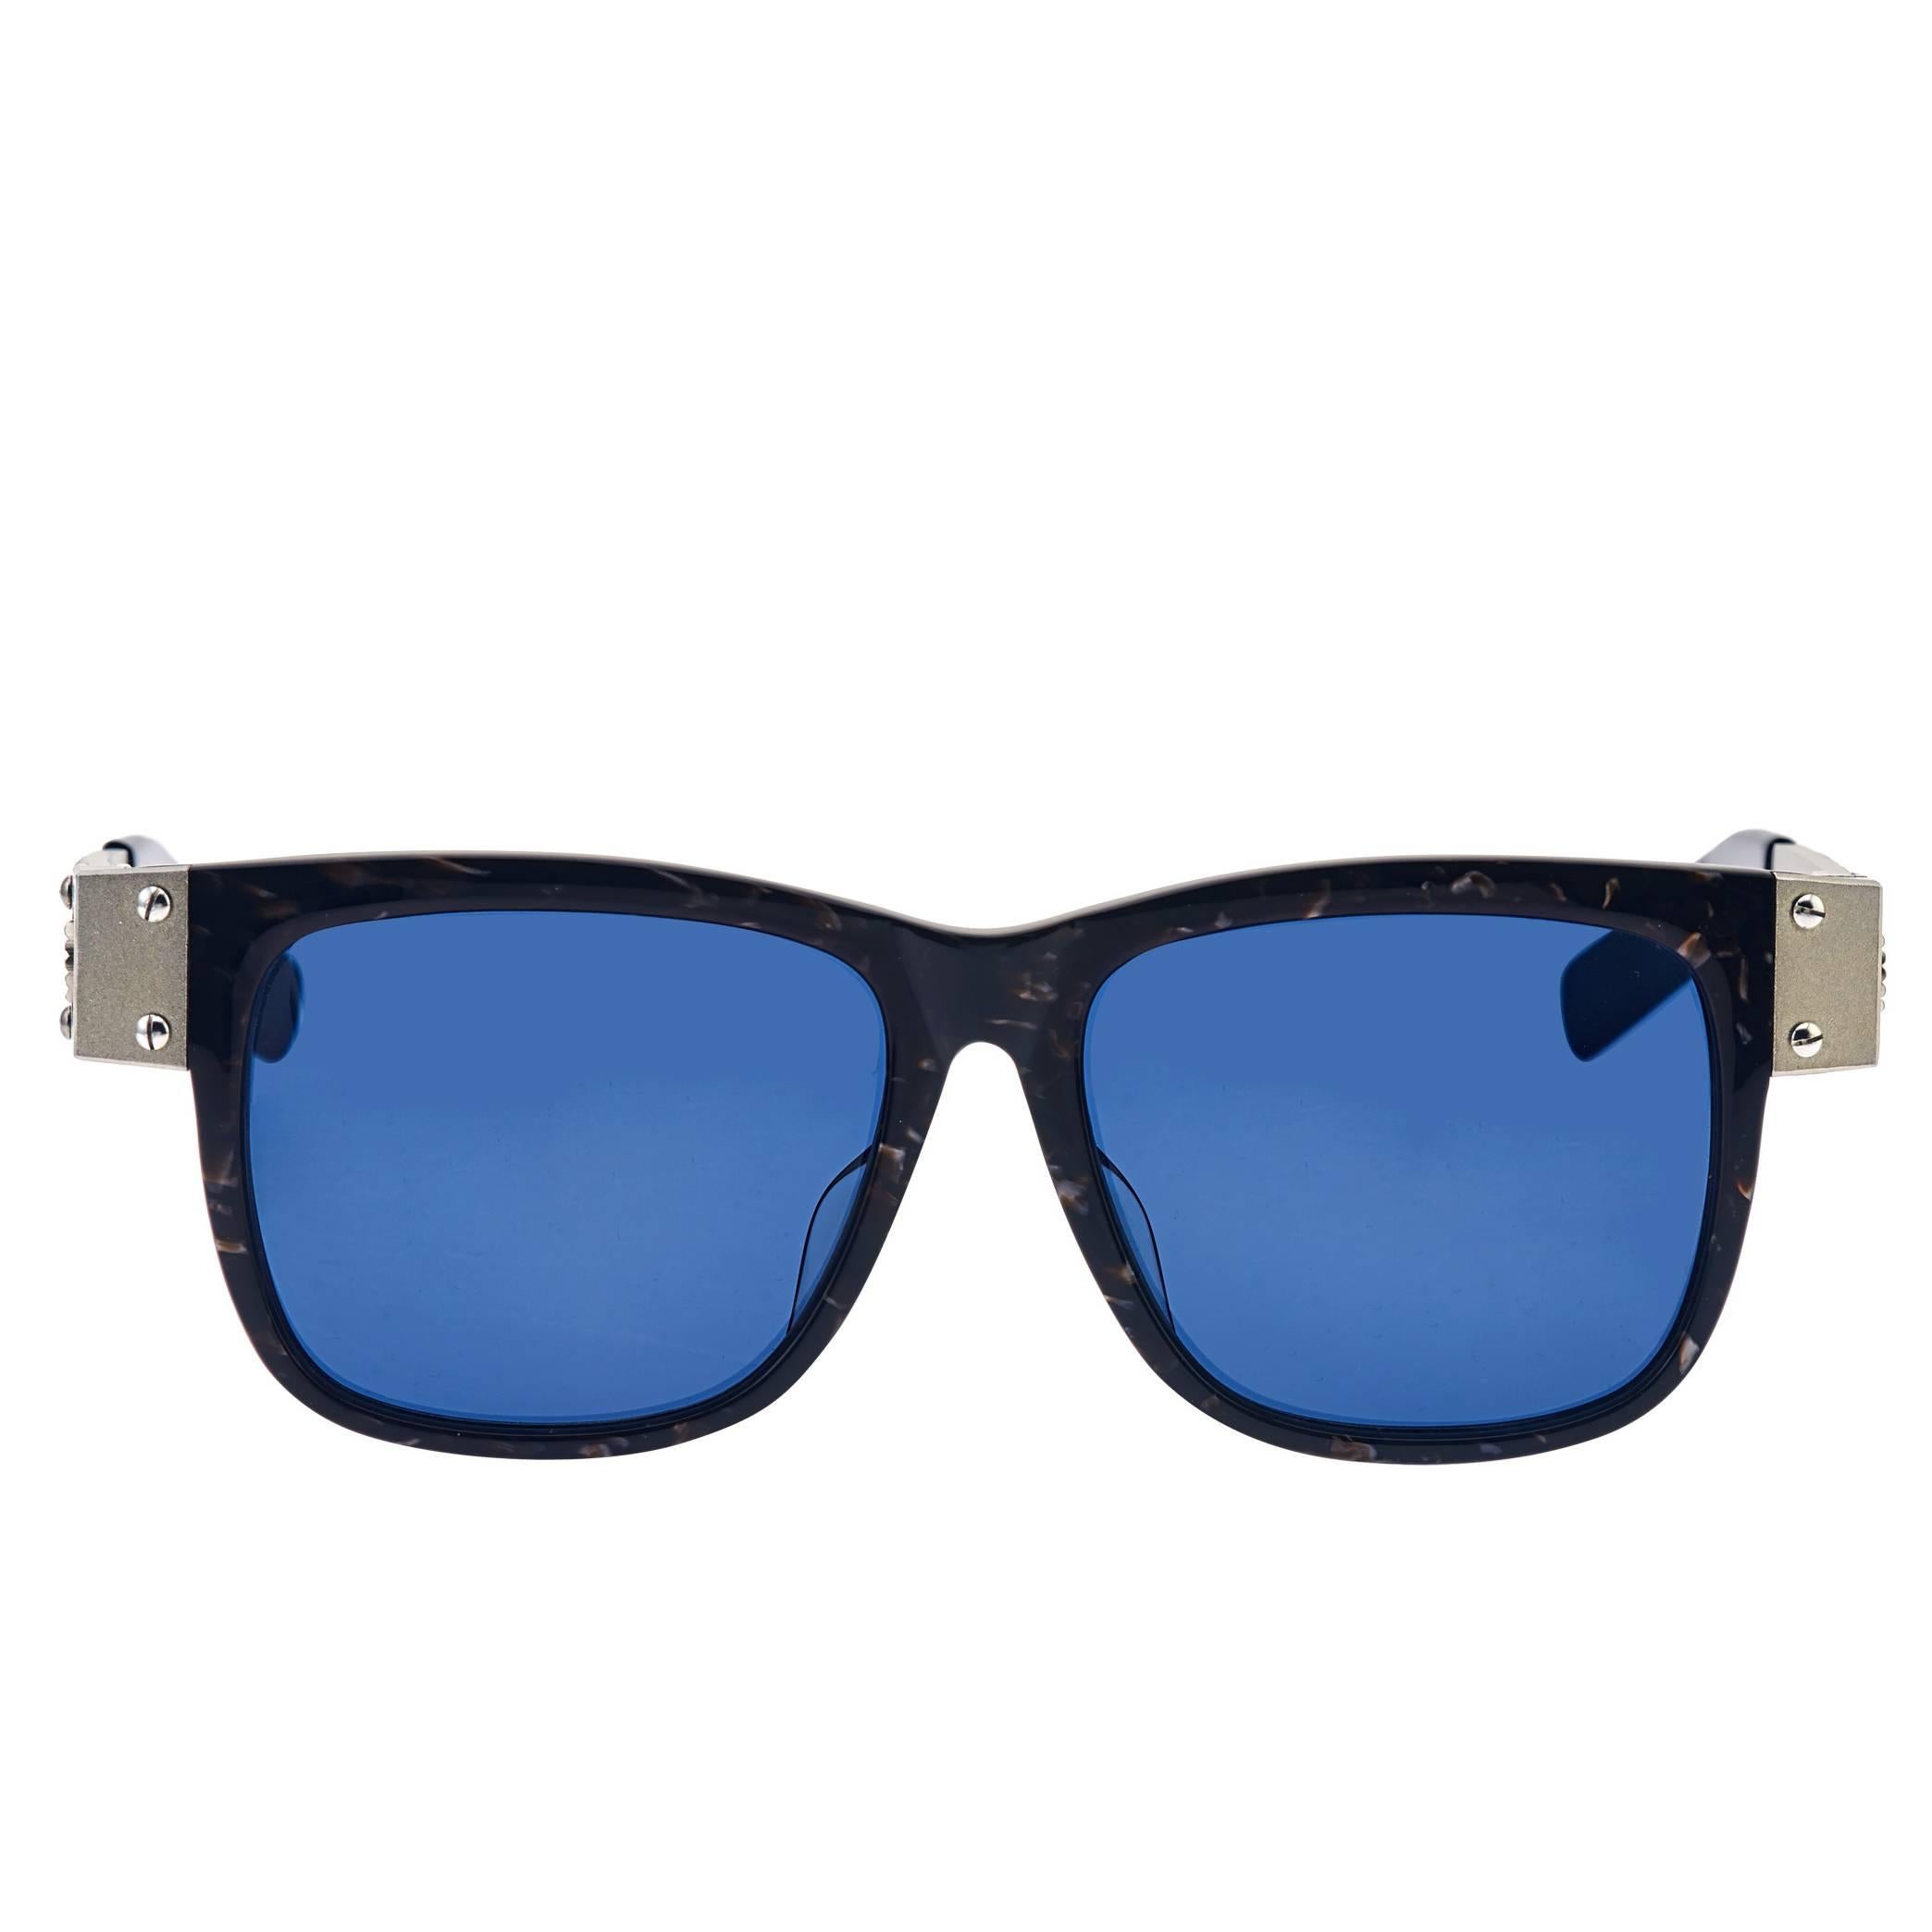 Jean Paul Gaultier Vintage 56-8002 Sunglasses